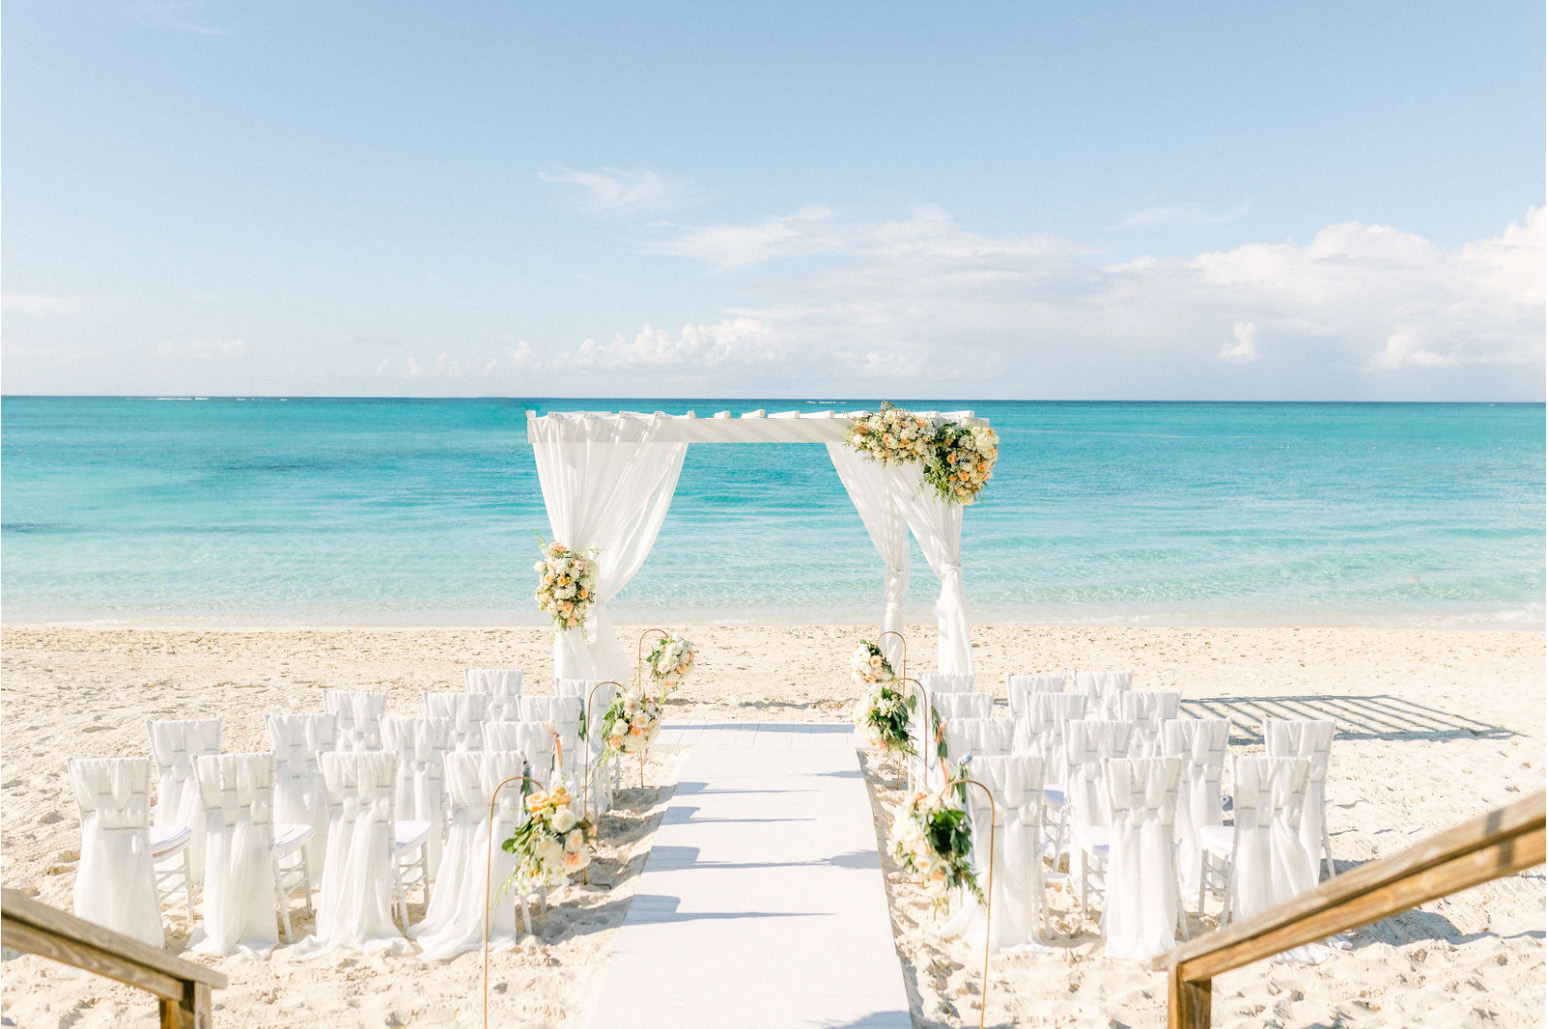 https://cdn.sandals.com/beaches/v12/images/weddings/locations/BeachFrontWedding.jpg